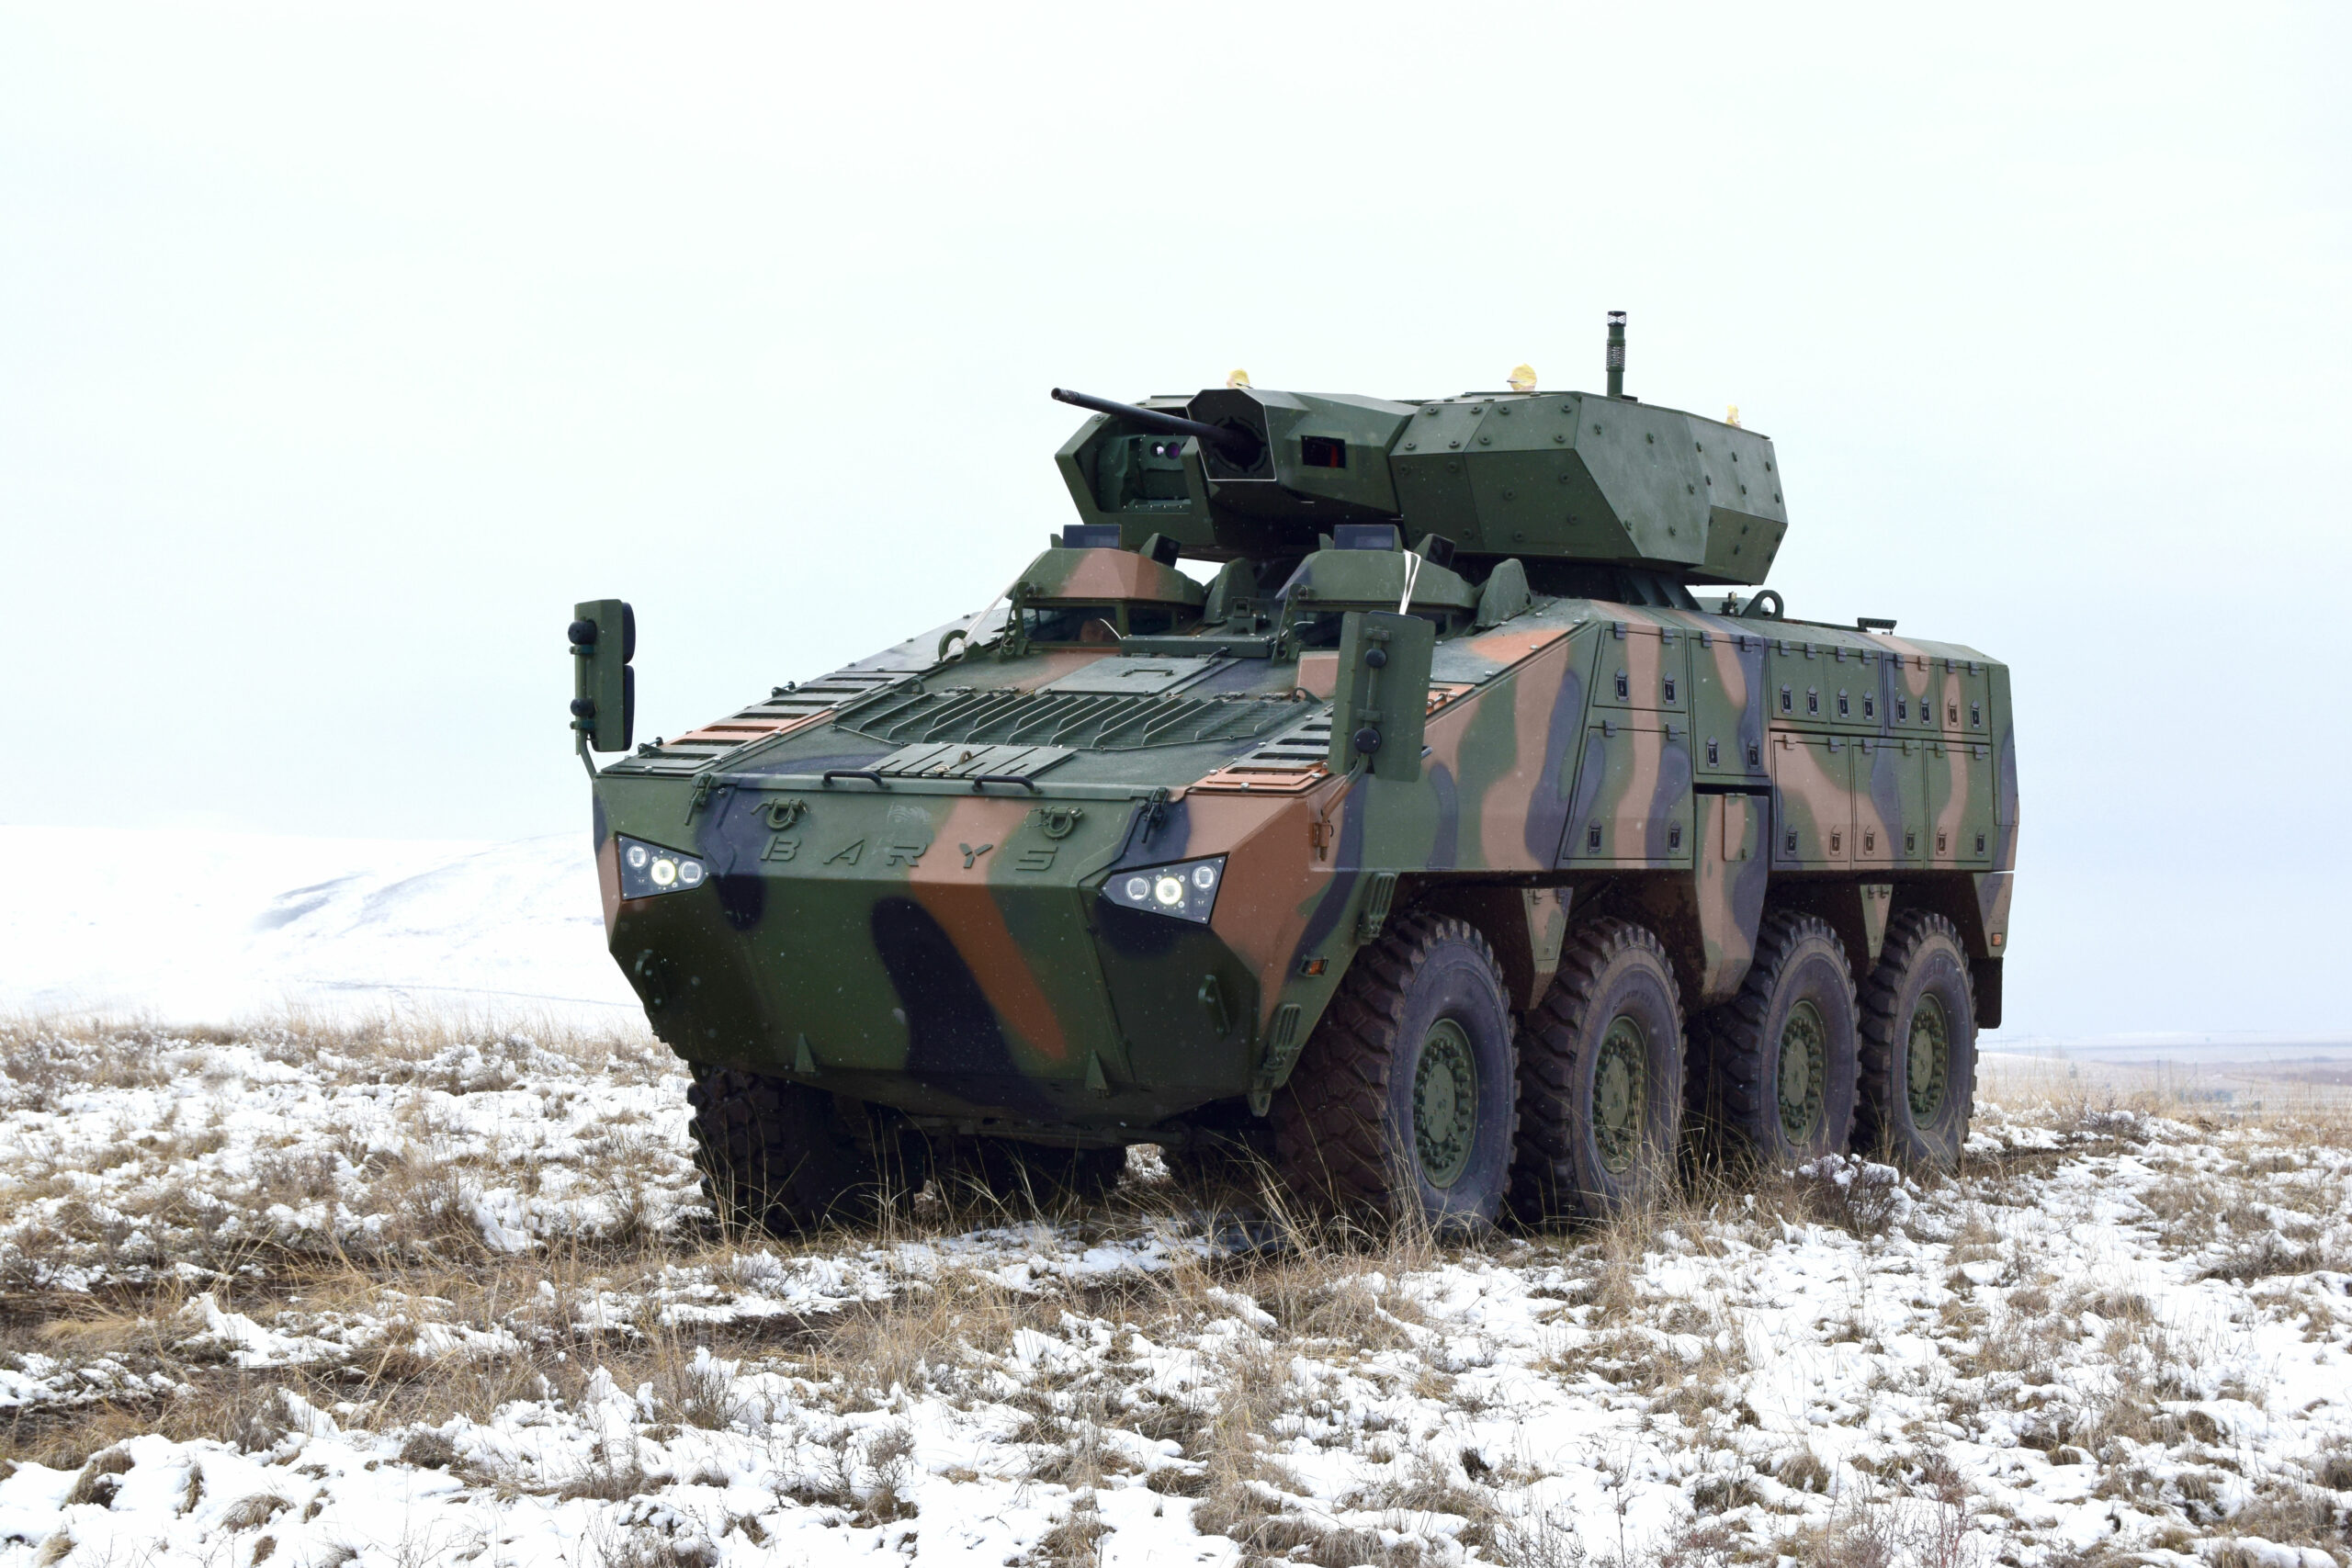 Kazakhstan Paramount Engineering's Barys combat vehicle in the snow